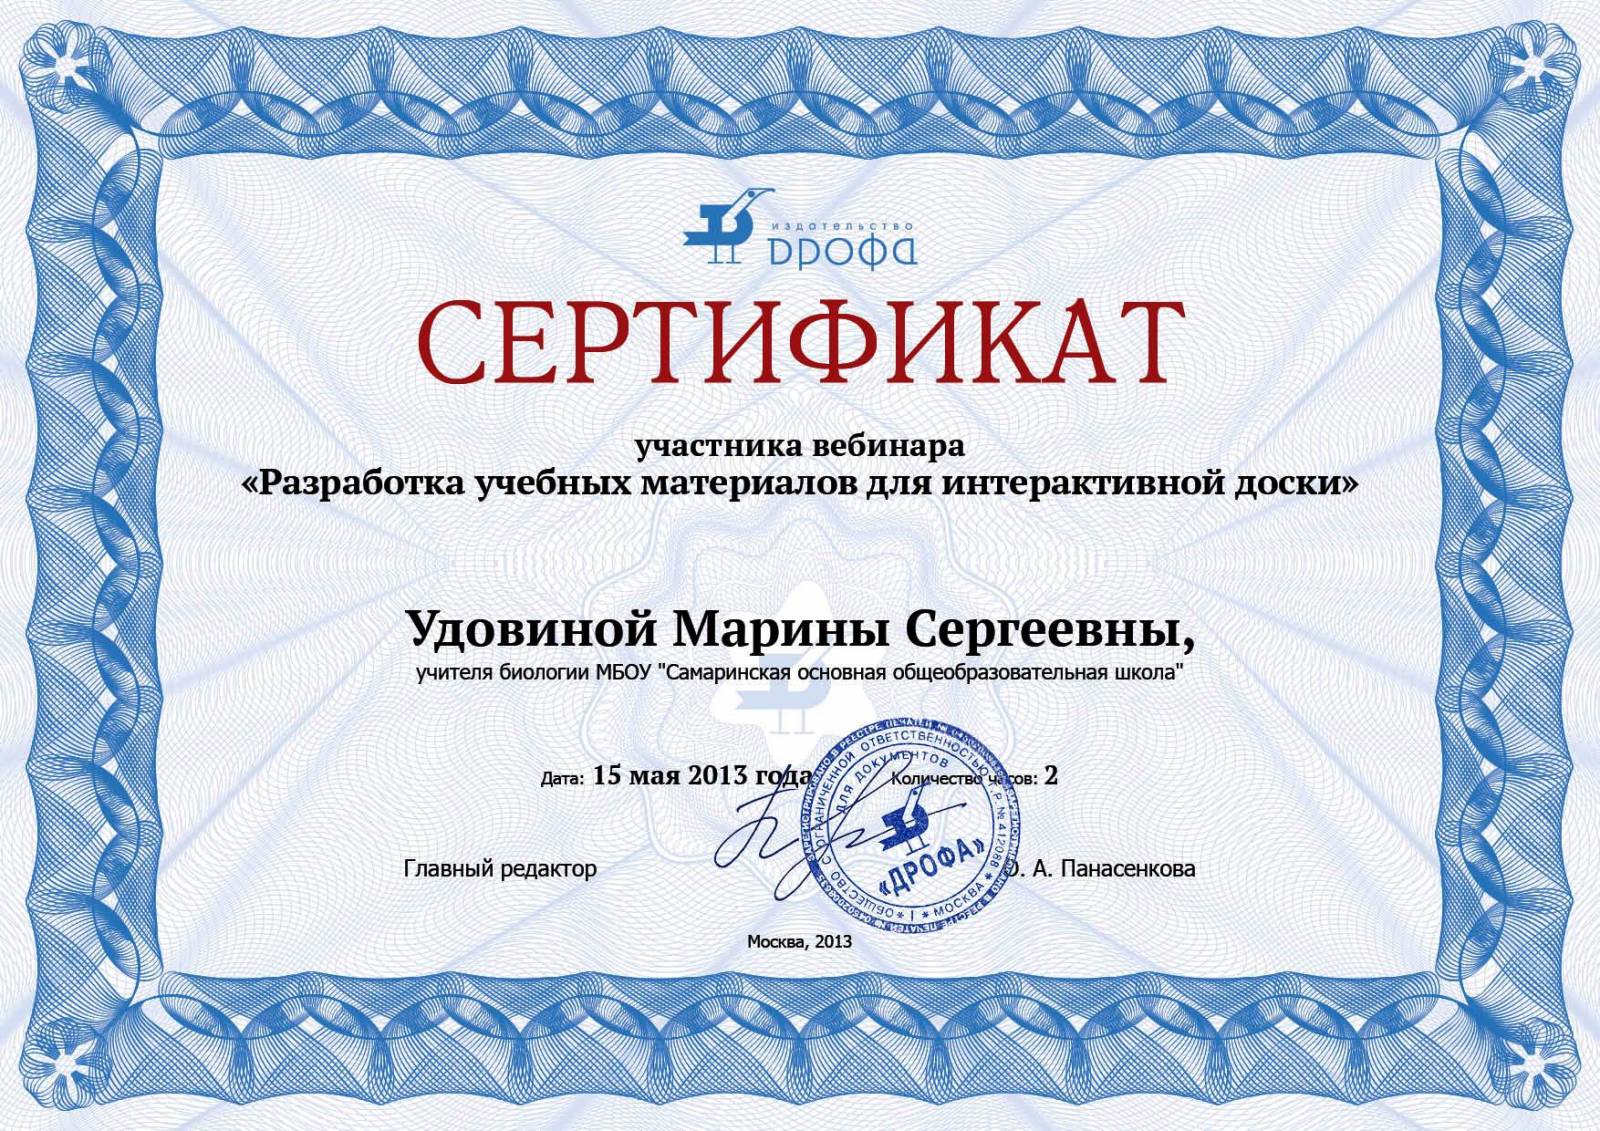 Сертификат педагога